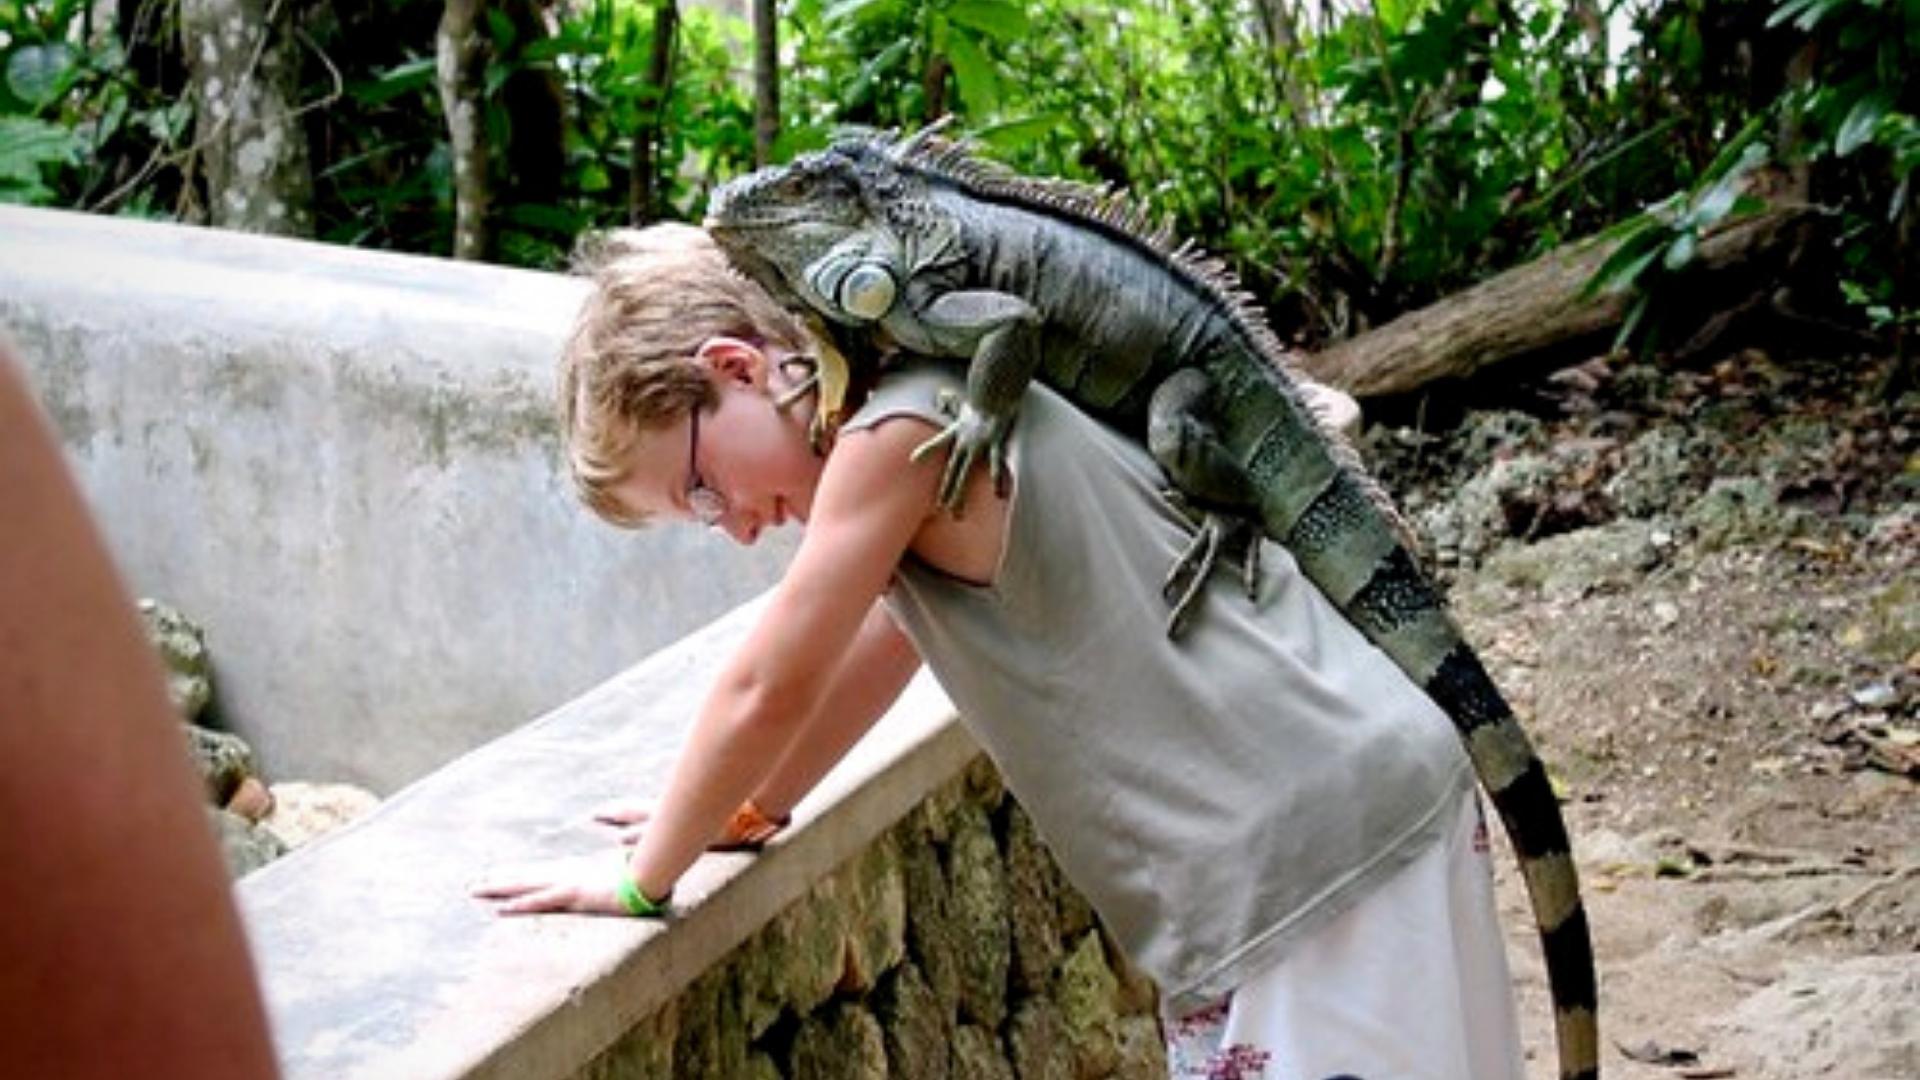 Imagen de referencia de niño con iguana en la espalda. Foto: Georgia Popplewell